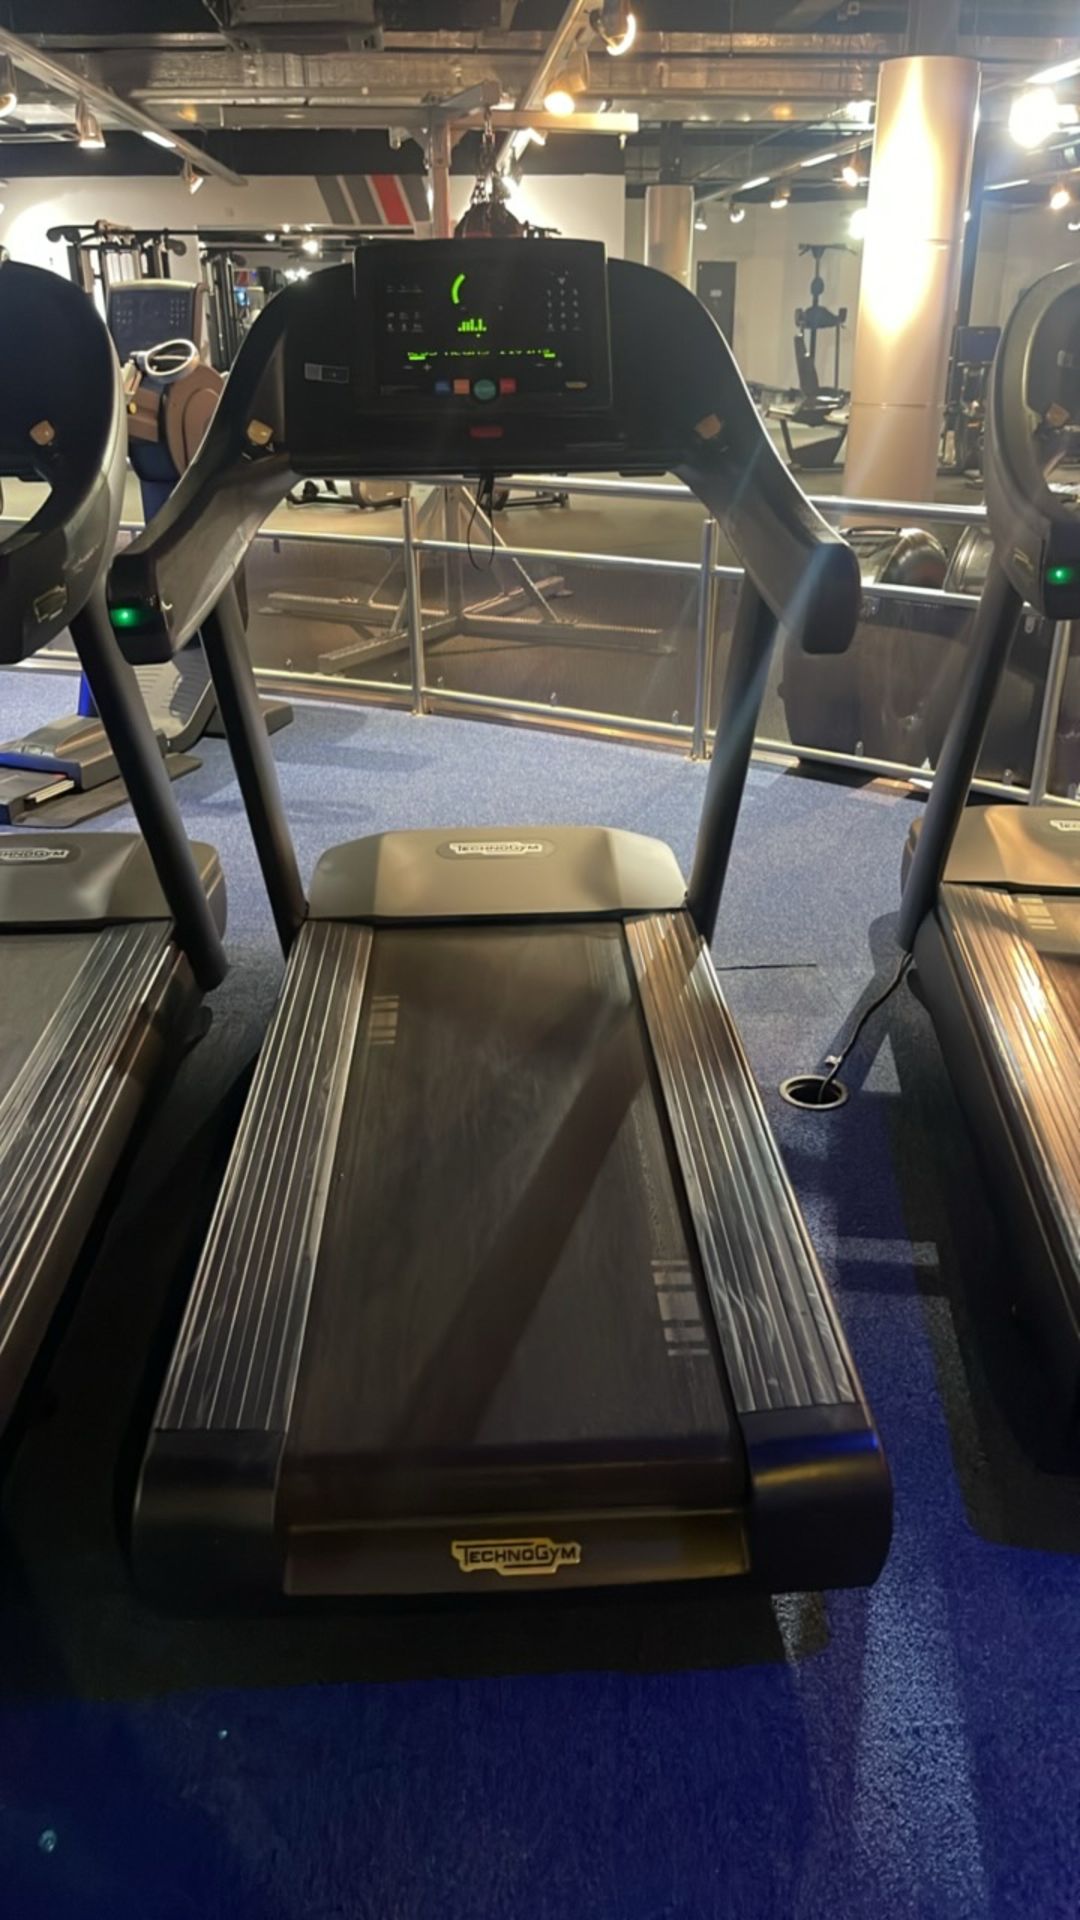 Technogym Treadmill 1000 - Image 2 of 7